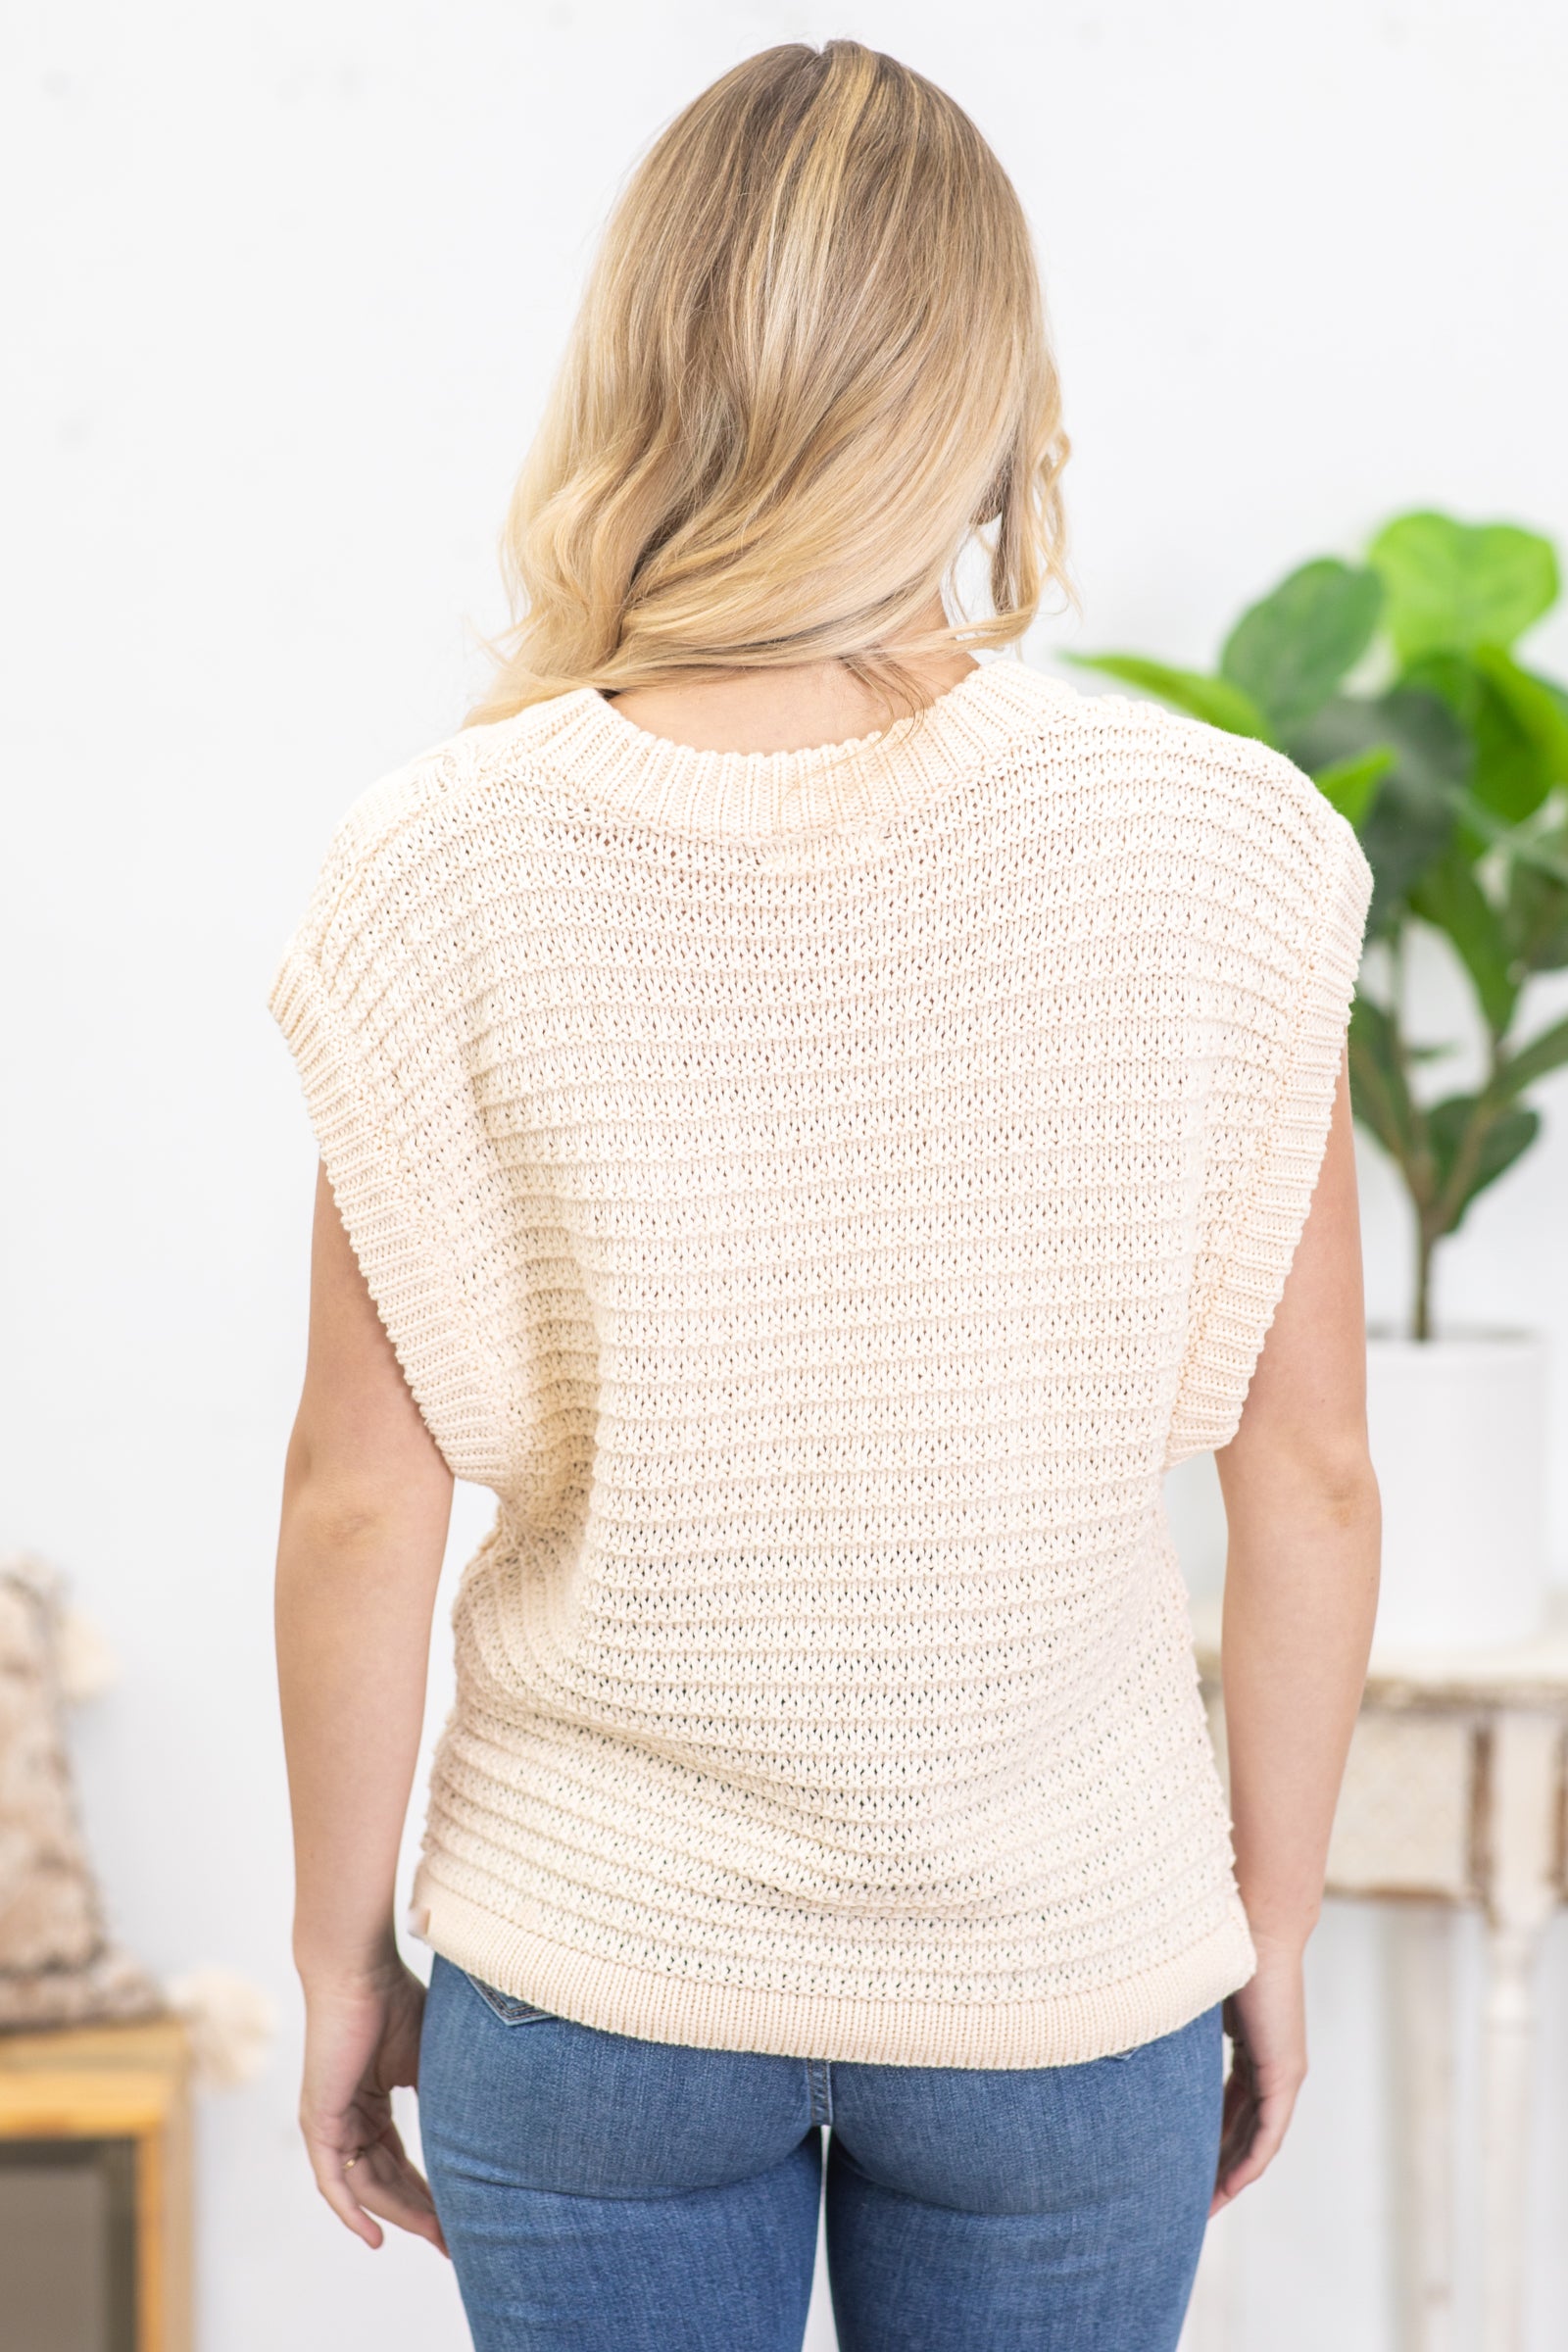 Beige Drop Shoulder Cable Sweater Knit Top